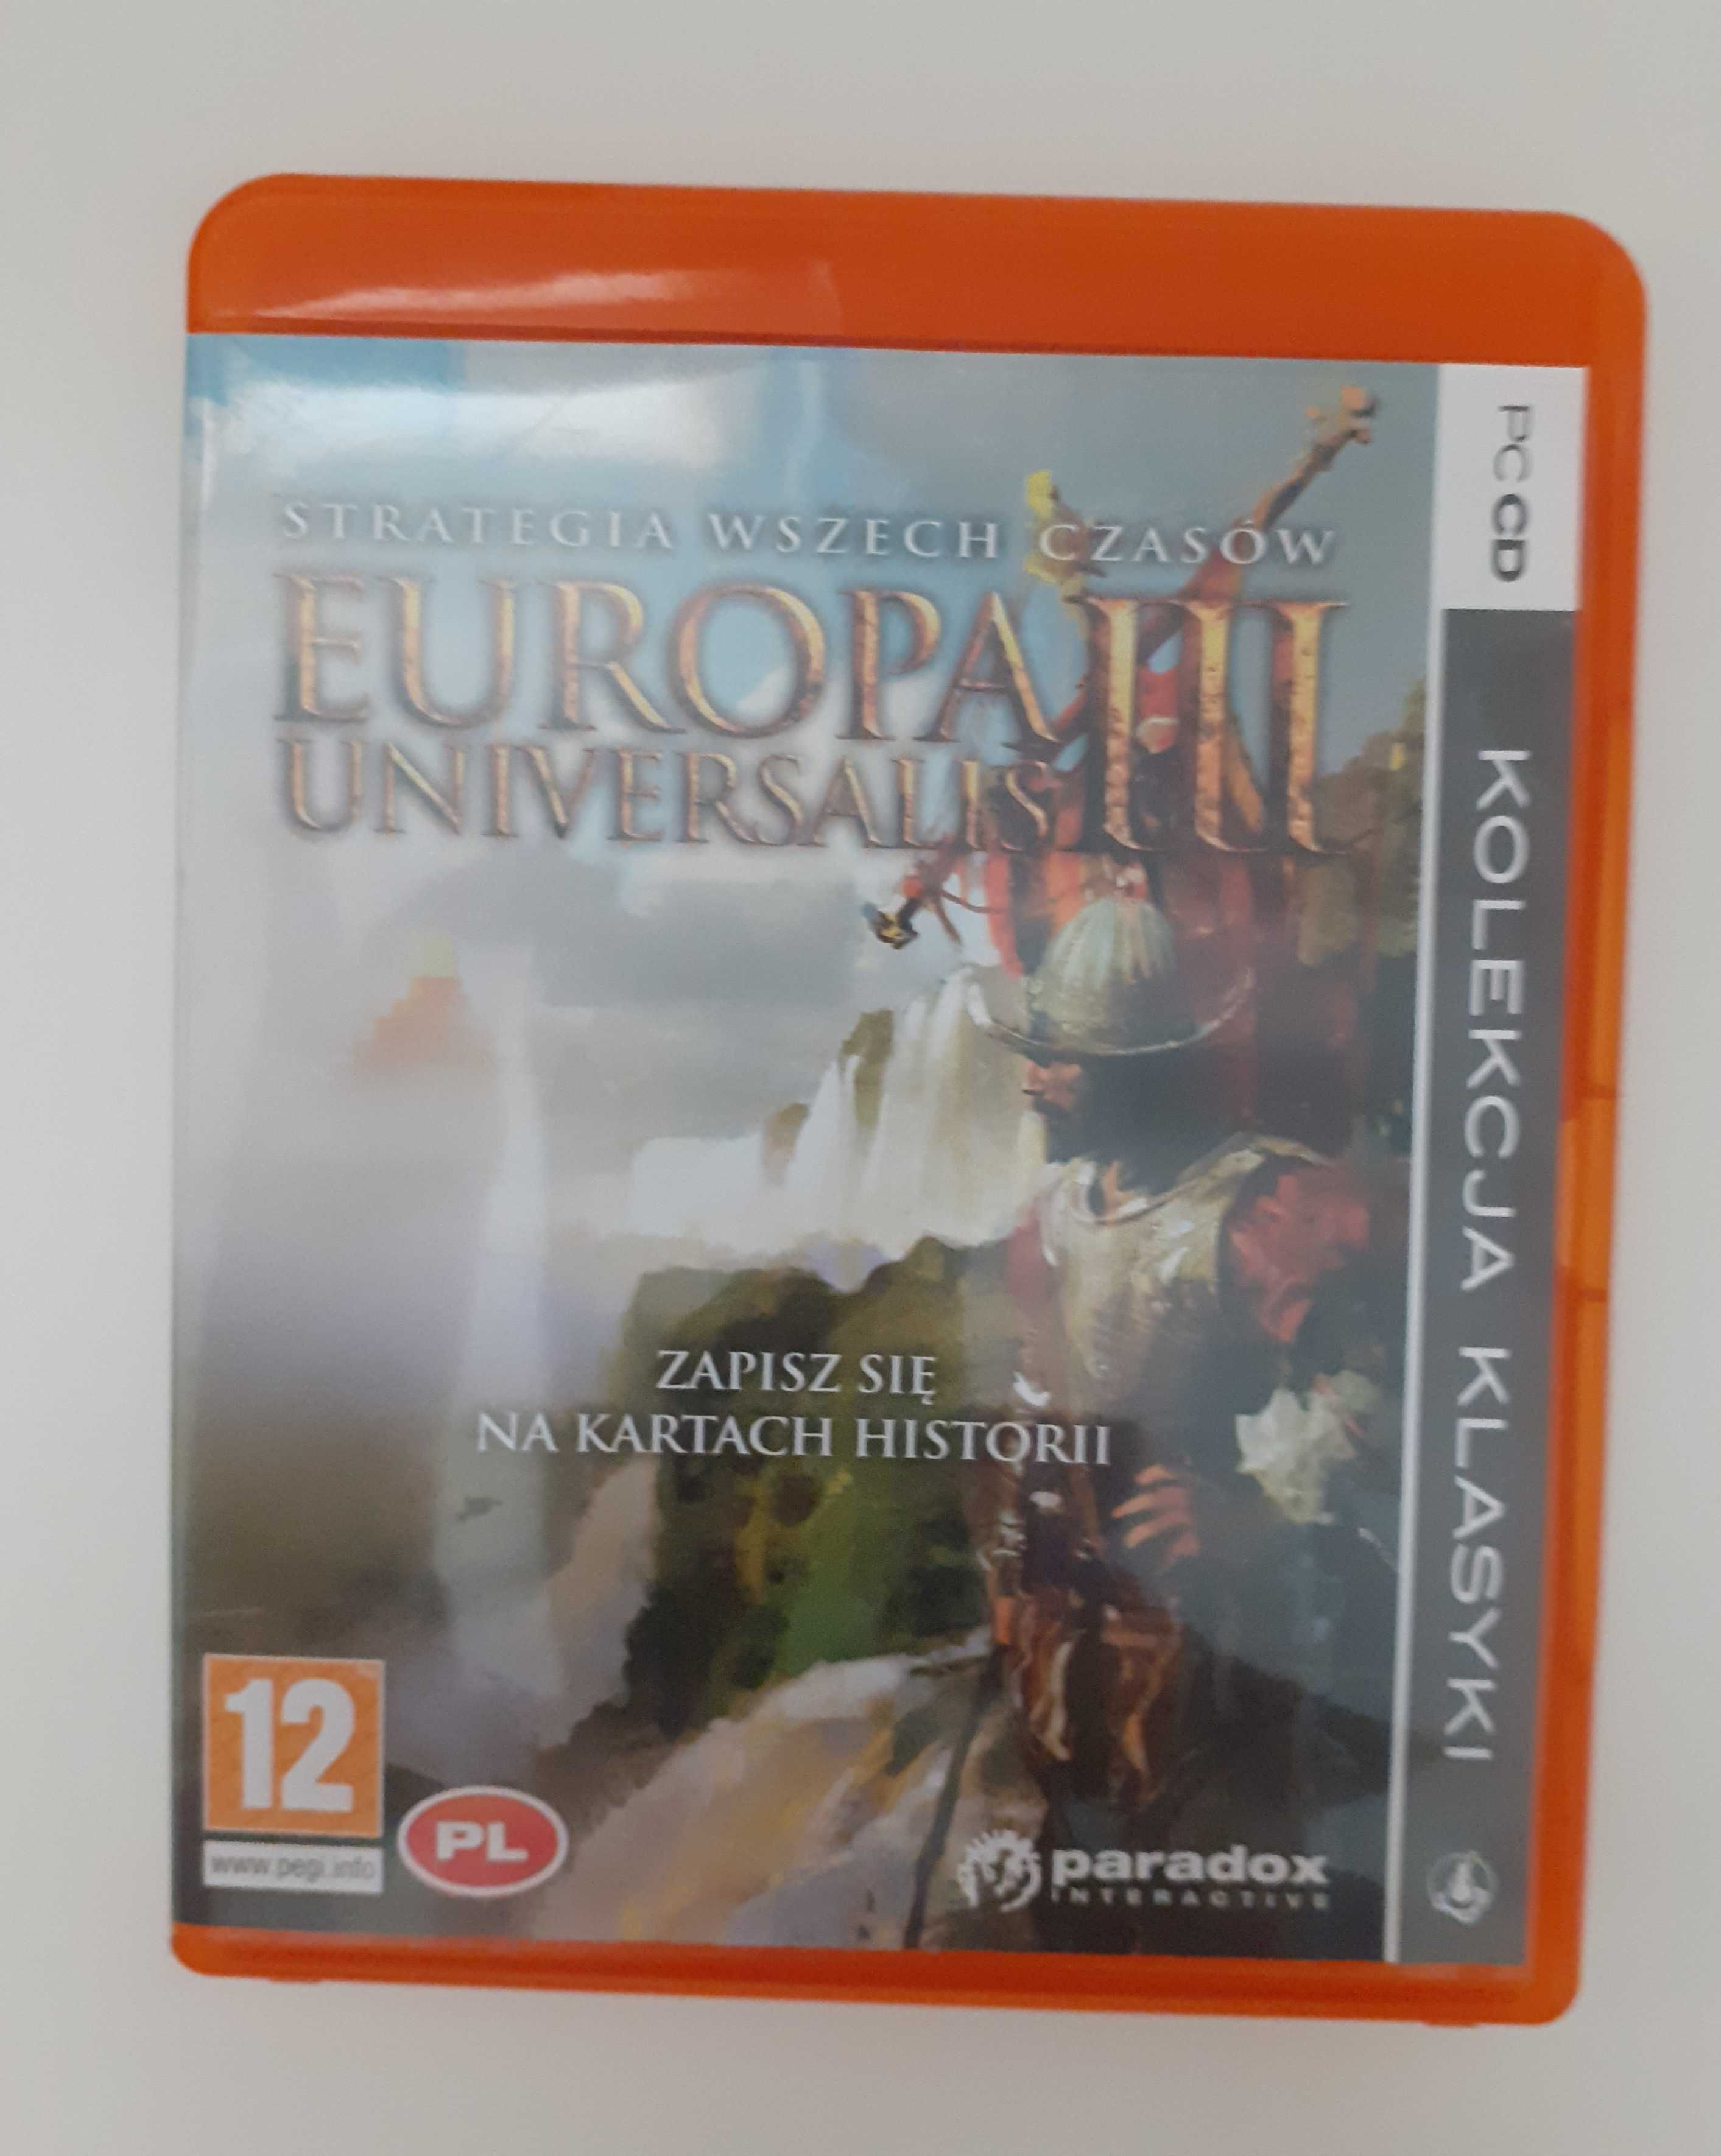 Gra na PC Europa III Universalis